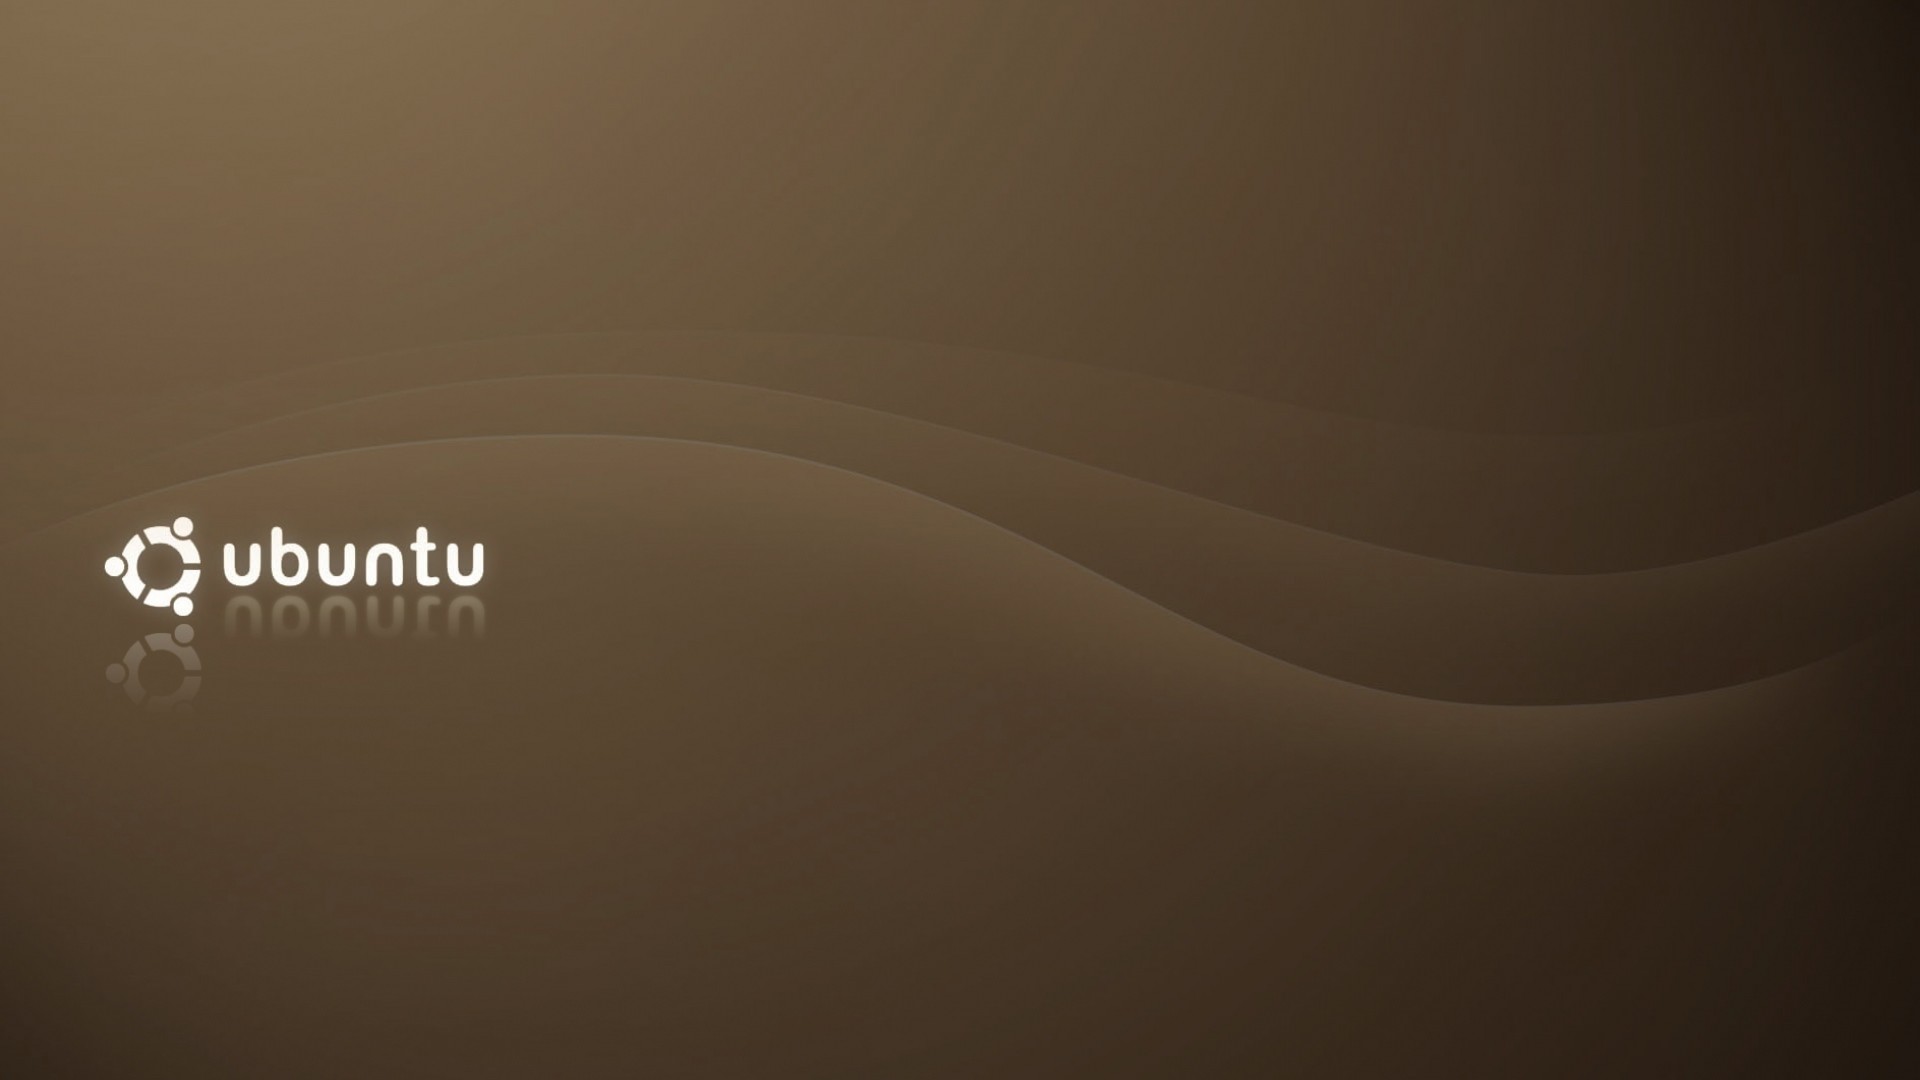 sfondo di ubuntu,marrone,testo,giallo,cielo,atmosfera